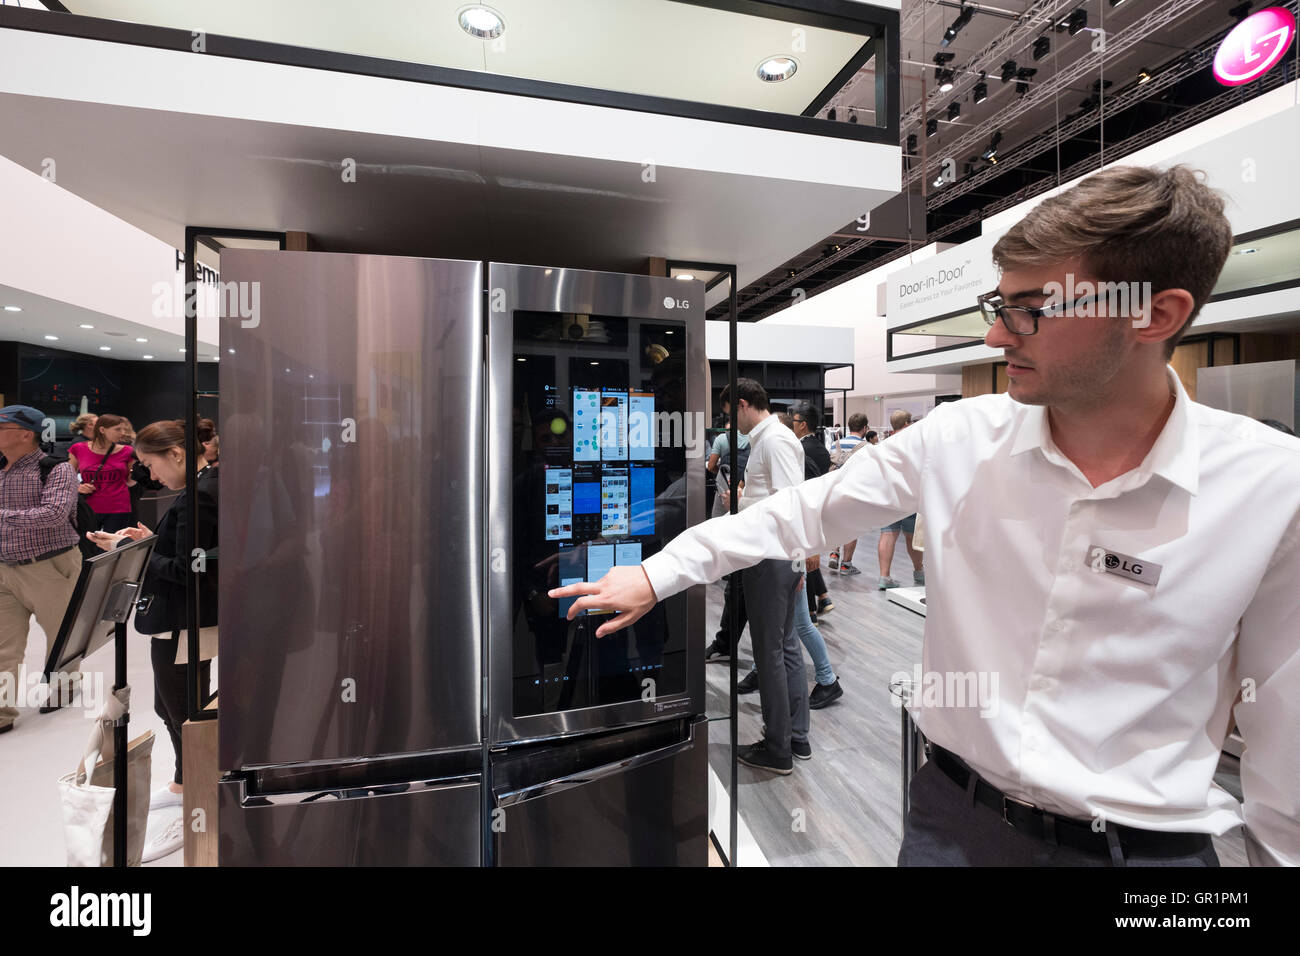 LG frigorifero / congelatore con ampio display touchscreen a 2016 IFA (Internationale Funkausstellung Berlin), Berlino, Germania Foto Stock